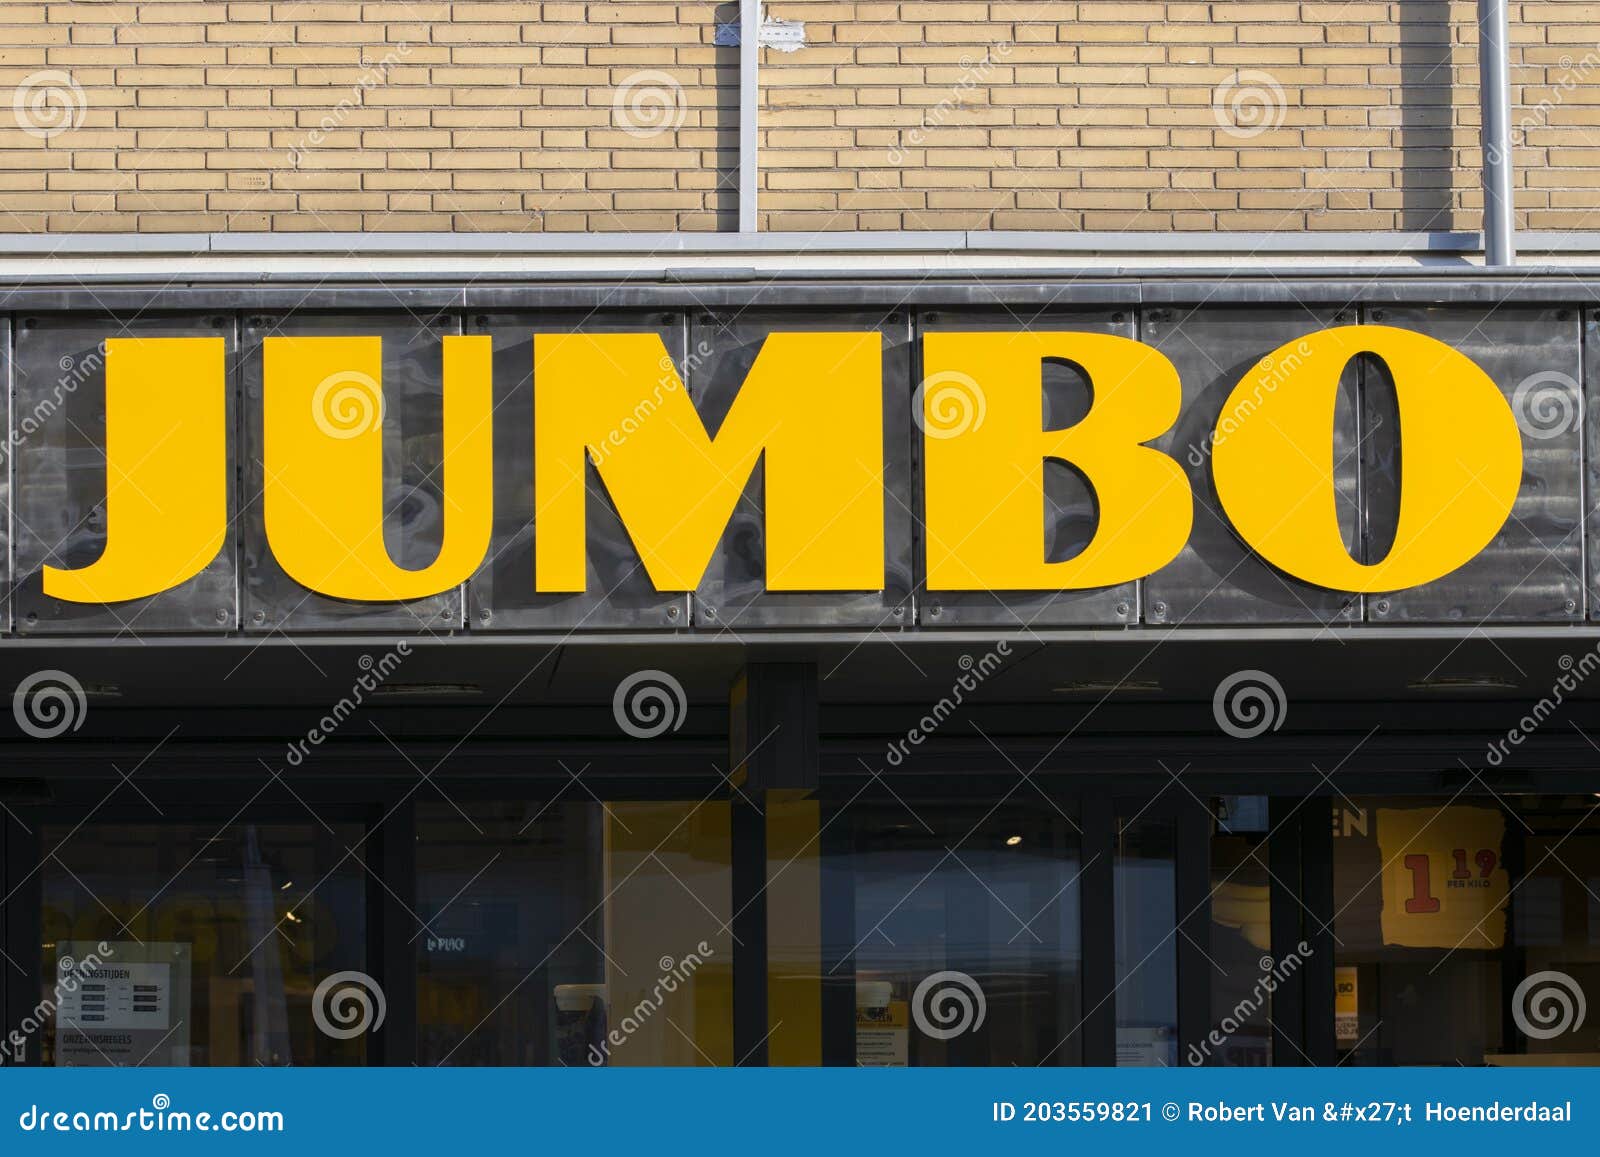 Ook litteken Extreem Billboard Jumbo at Amsterdam the Netherlands 23-11-2020 Editorial Photo -  Image of jumbo, supermarket: 203559821